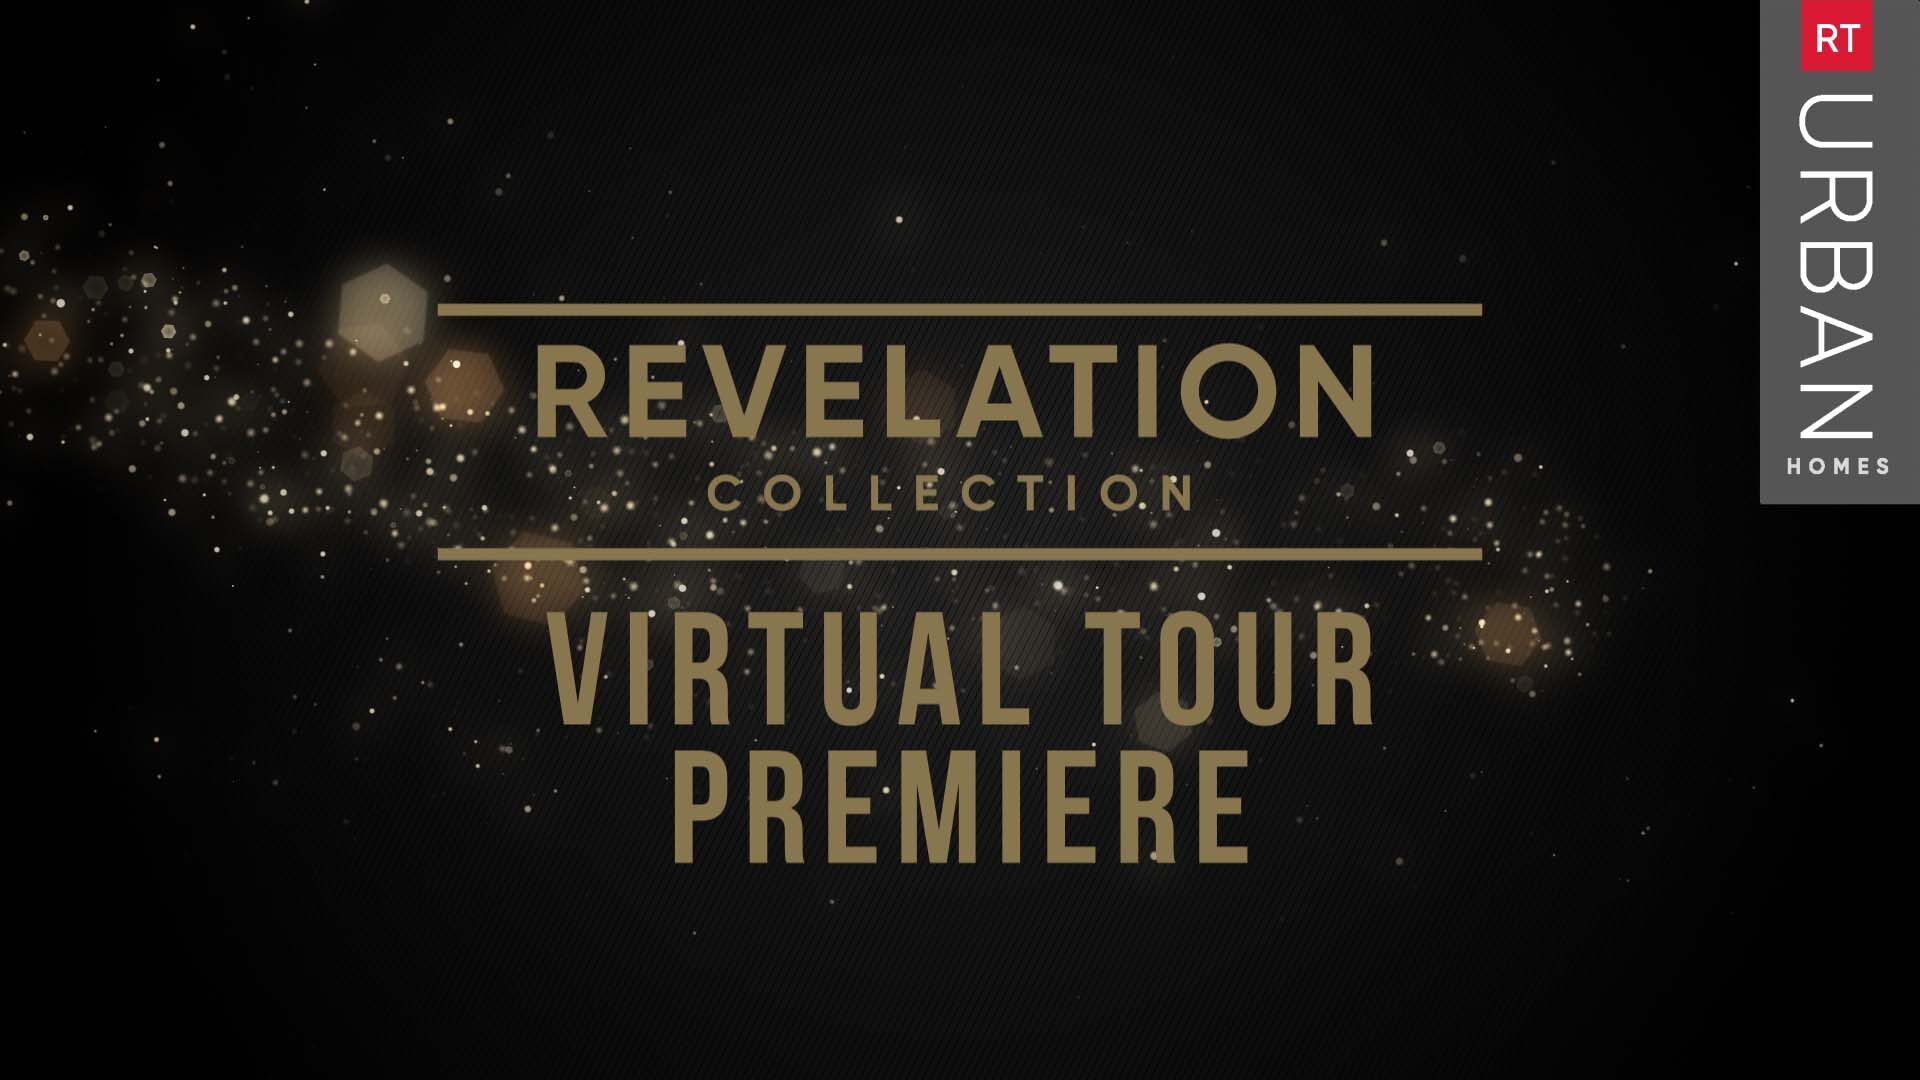 RT Urban Homes Revelation Collection Virtual Tour Premiere